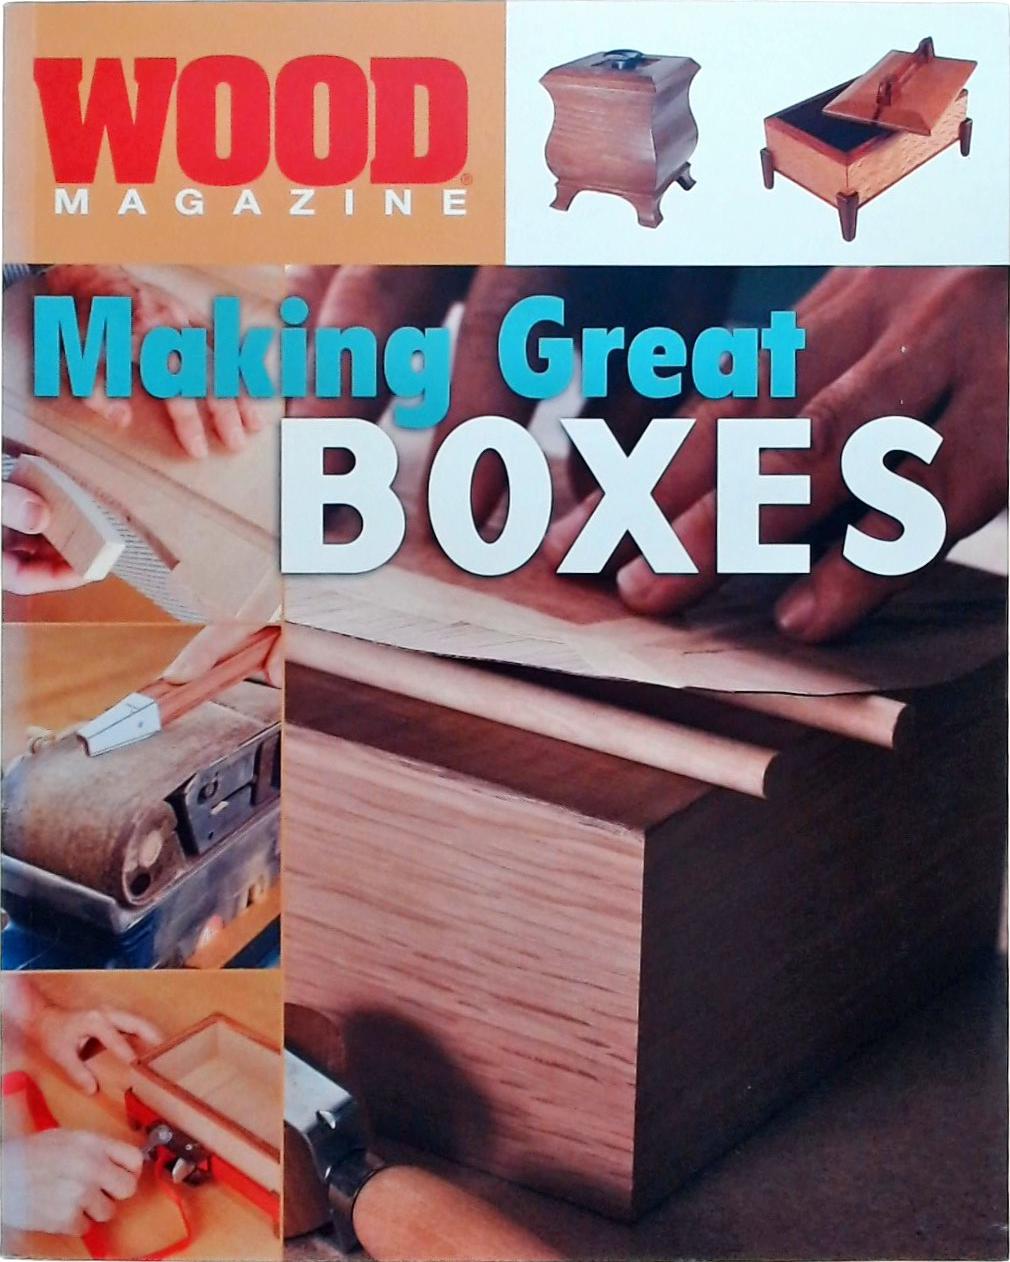 Wood Magazine - Making Great Boxes